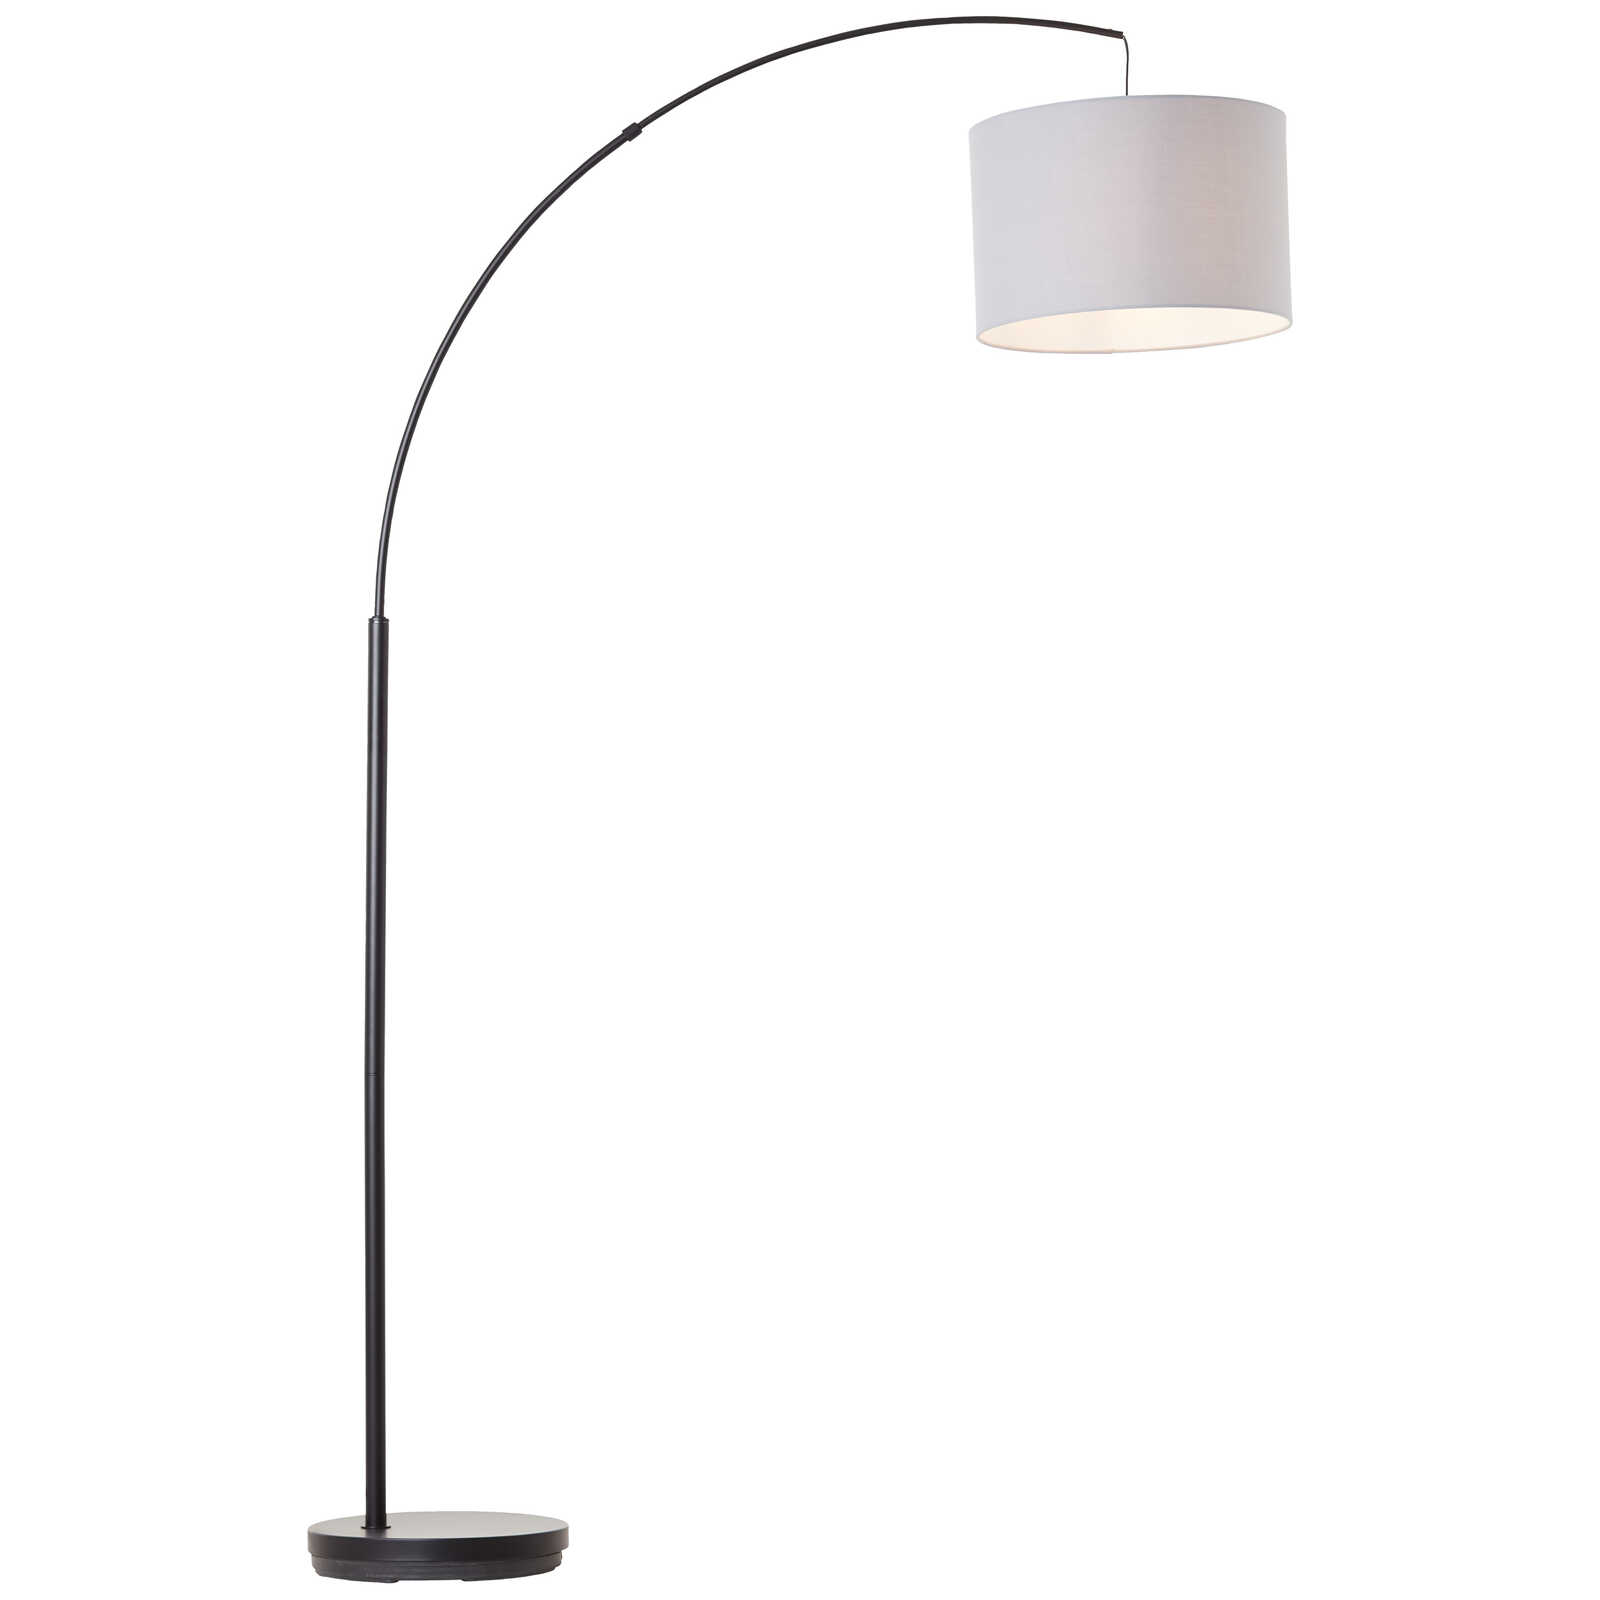             Arched textile floor lamp - Ada 2 - Grey
        